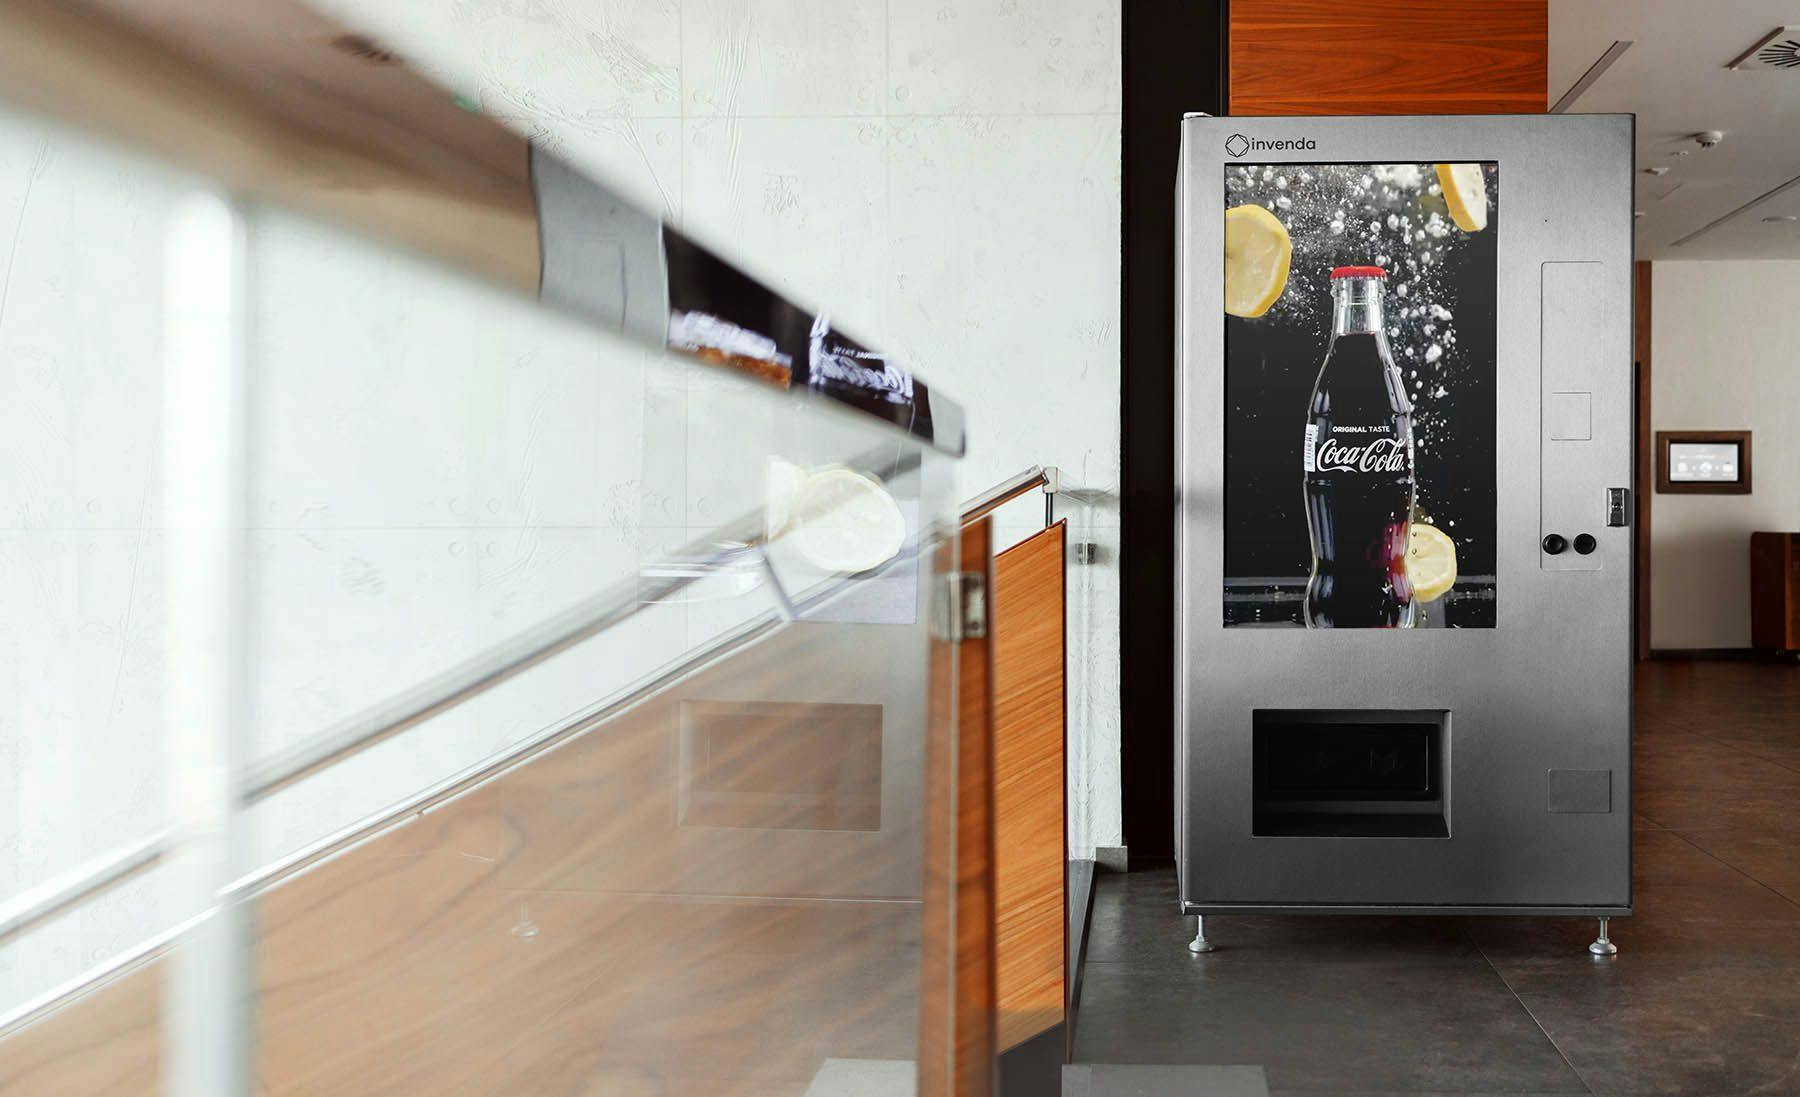 Smart vending machine showing a full screen Coca-Cola ad